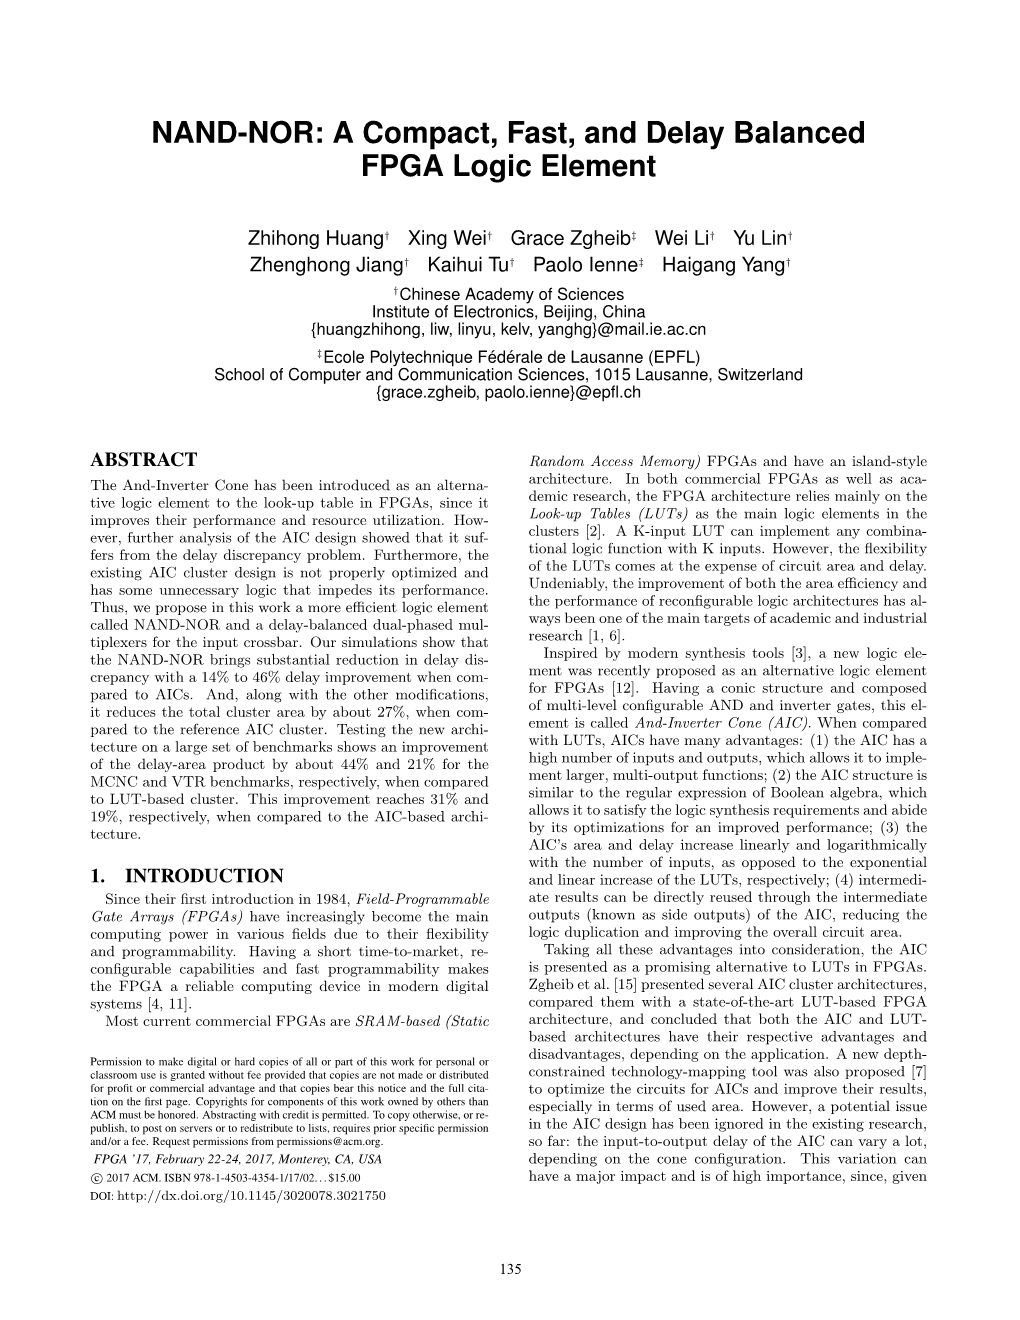 NAND-NOR: a Compact, Fast, and Delay Balanced FPGA Logic Element